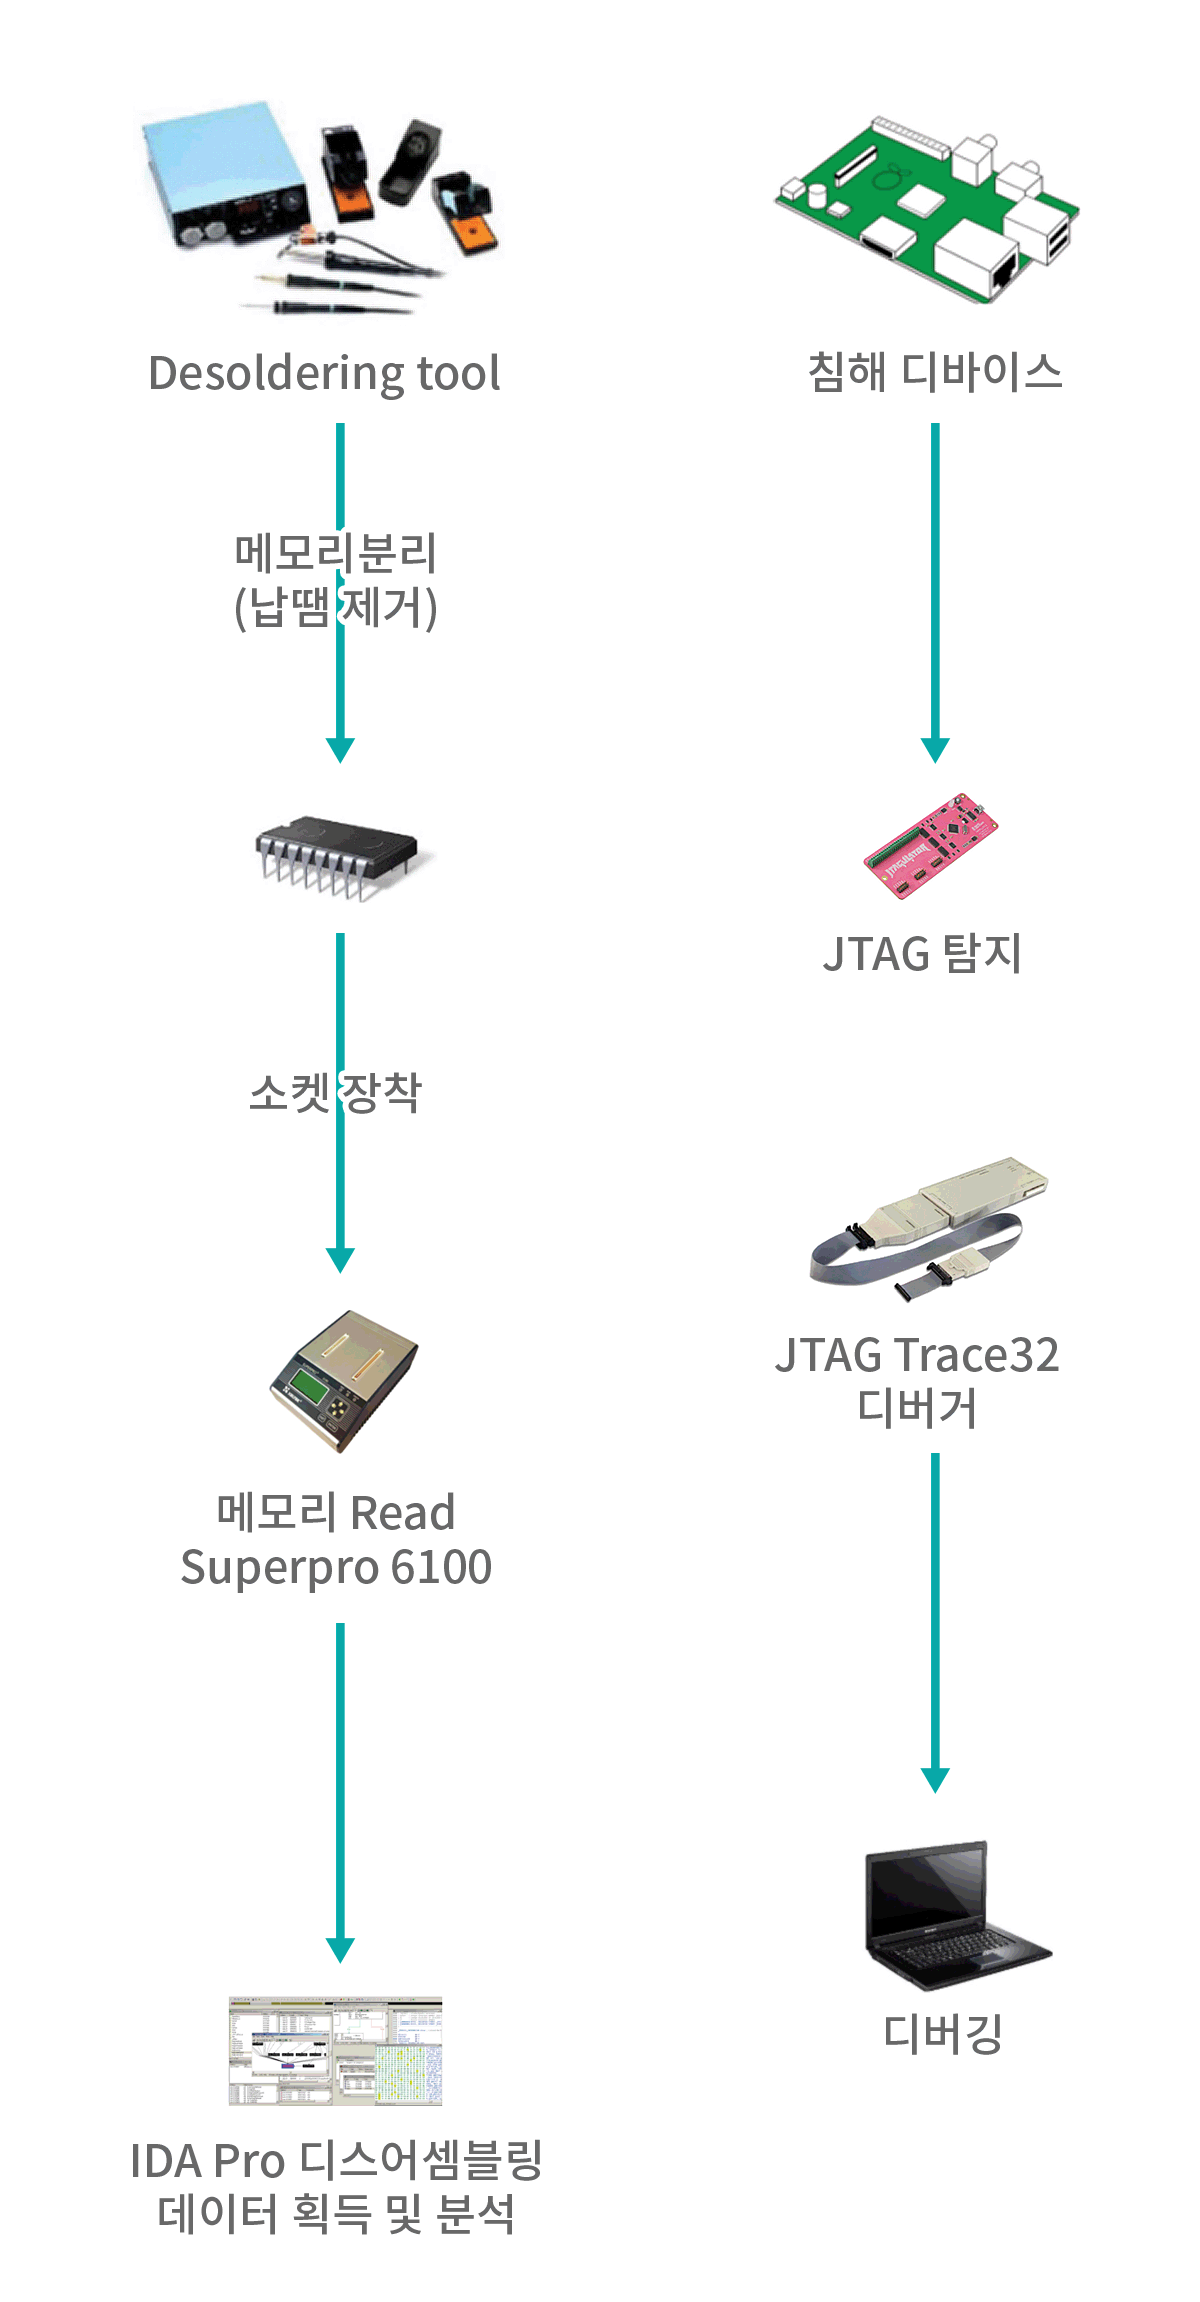 Desoldering tool에서 메모리분리(납땜 제거) 후 소켓장착, 메모리 Read Superpro 6100, IDA Pro 디스어셈블링(데이터 획득 및 분서), 침해 디바이스, JTAG 탐지, JTAG Trace32 디버거, 디버깅